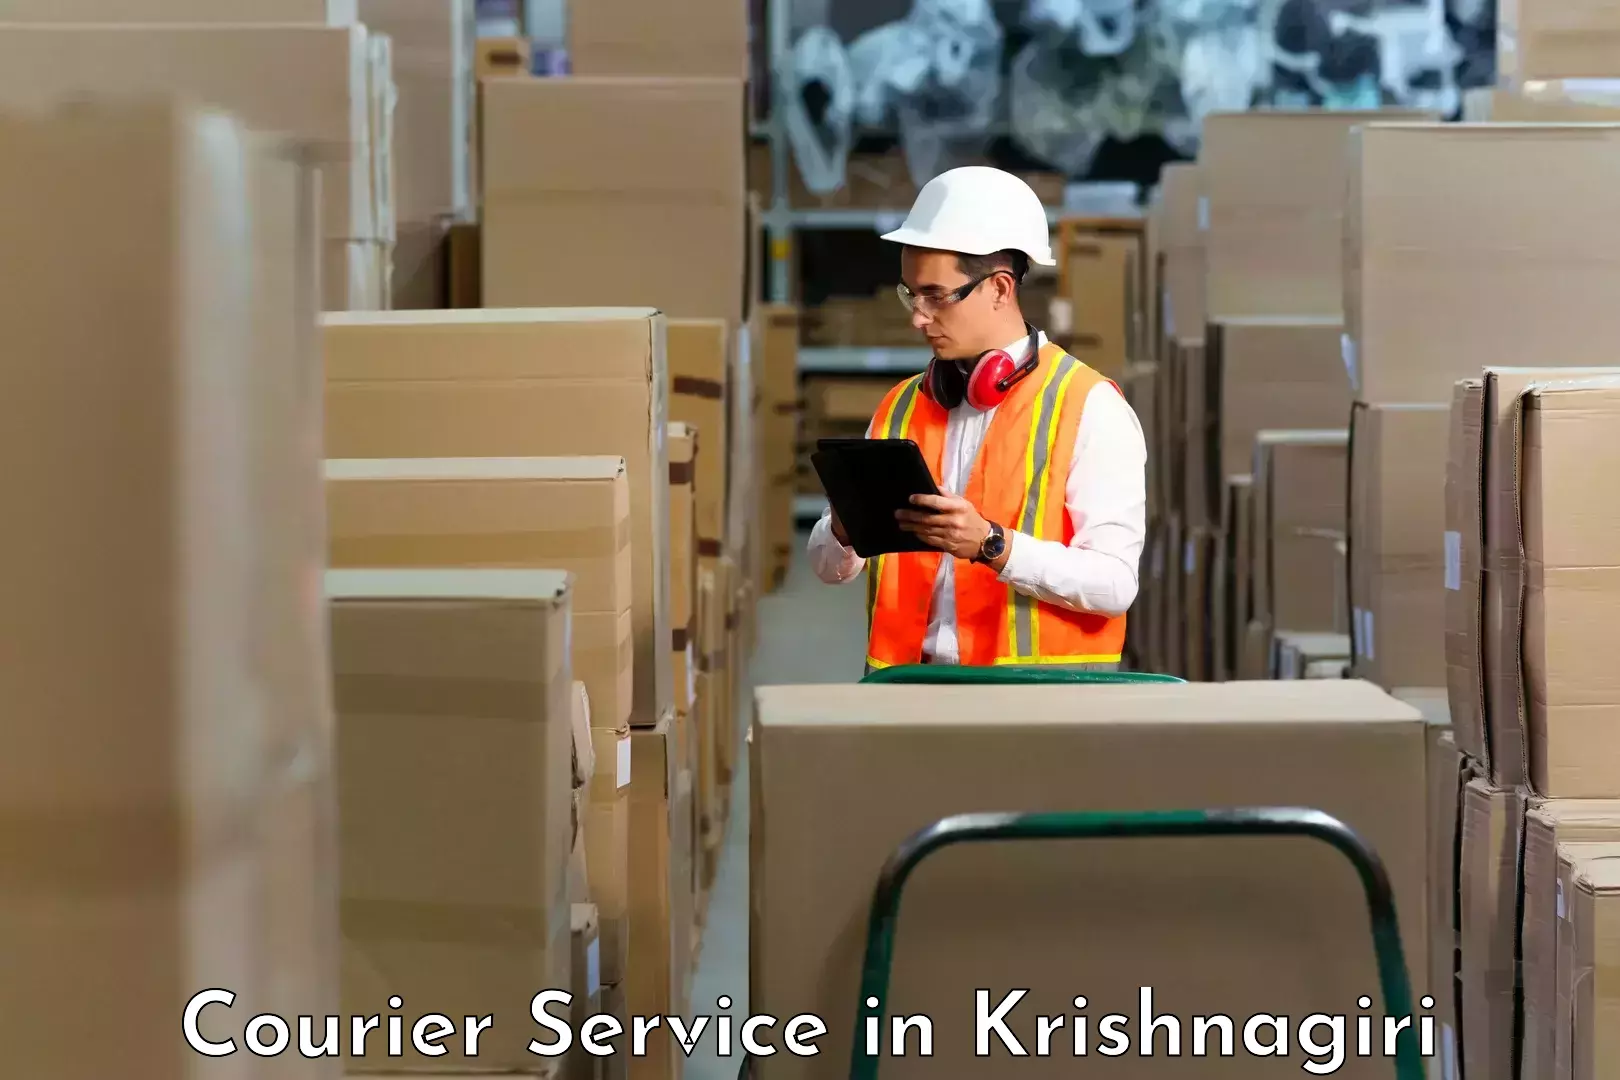 Customer-oriented courier services in Krishnagiri